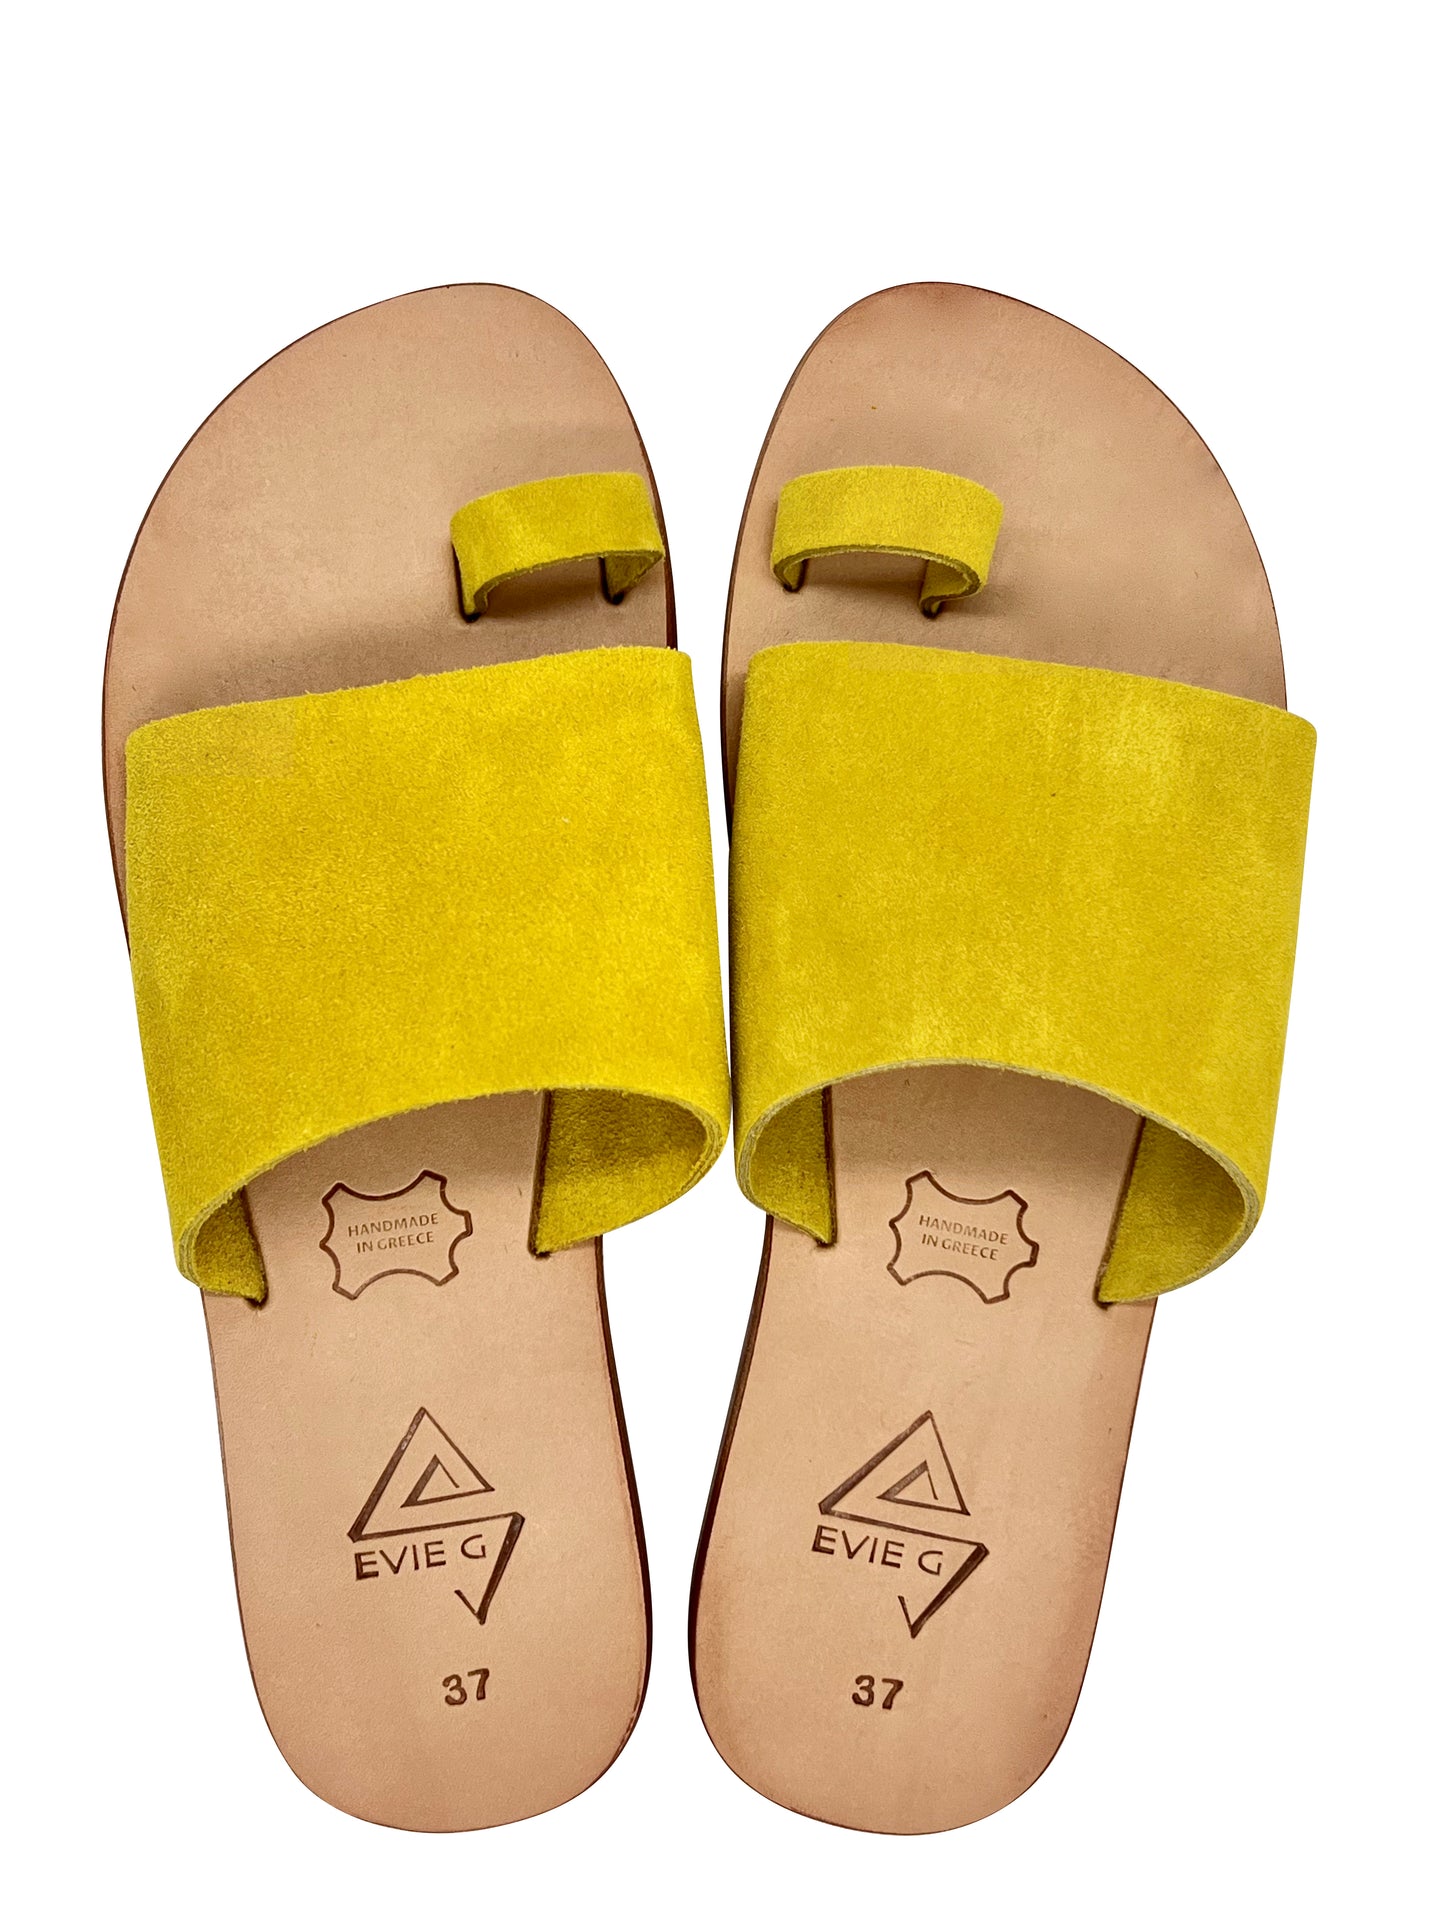 EVIE G Beta Yellow Suede Sandals